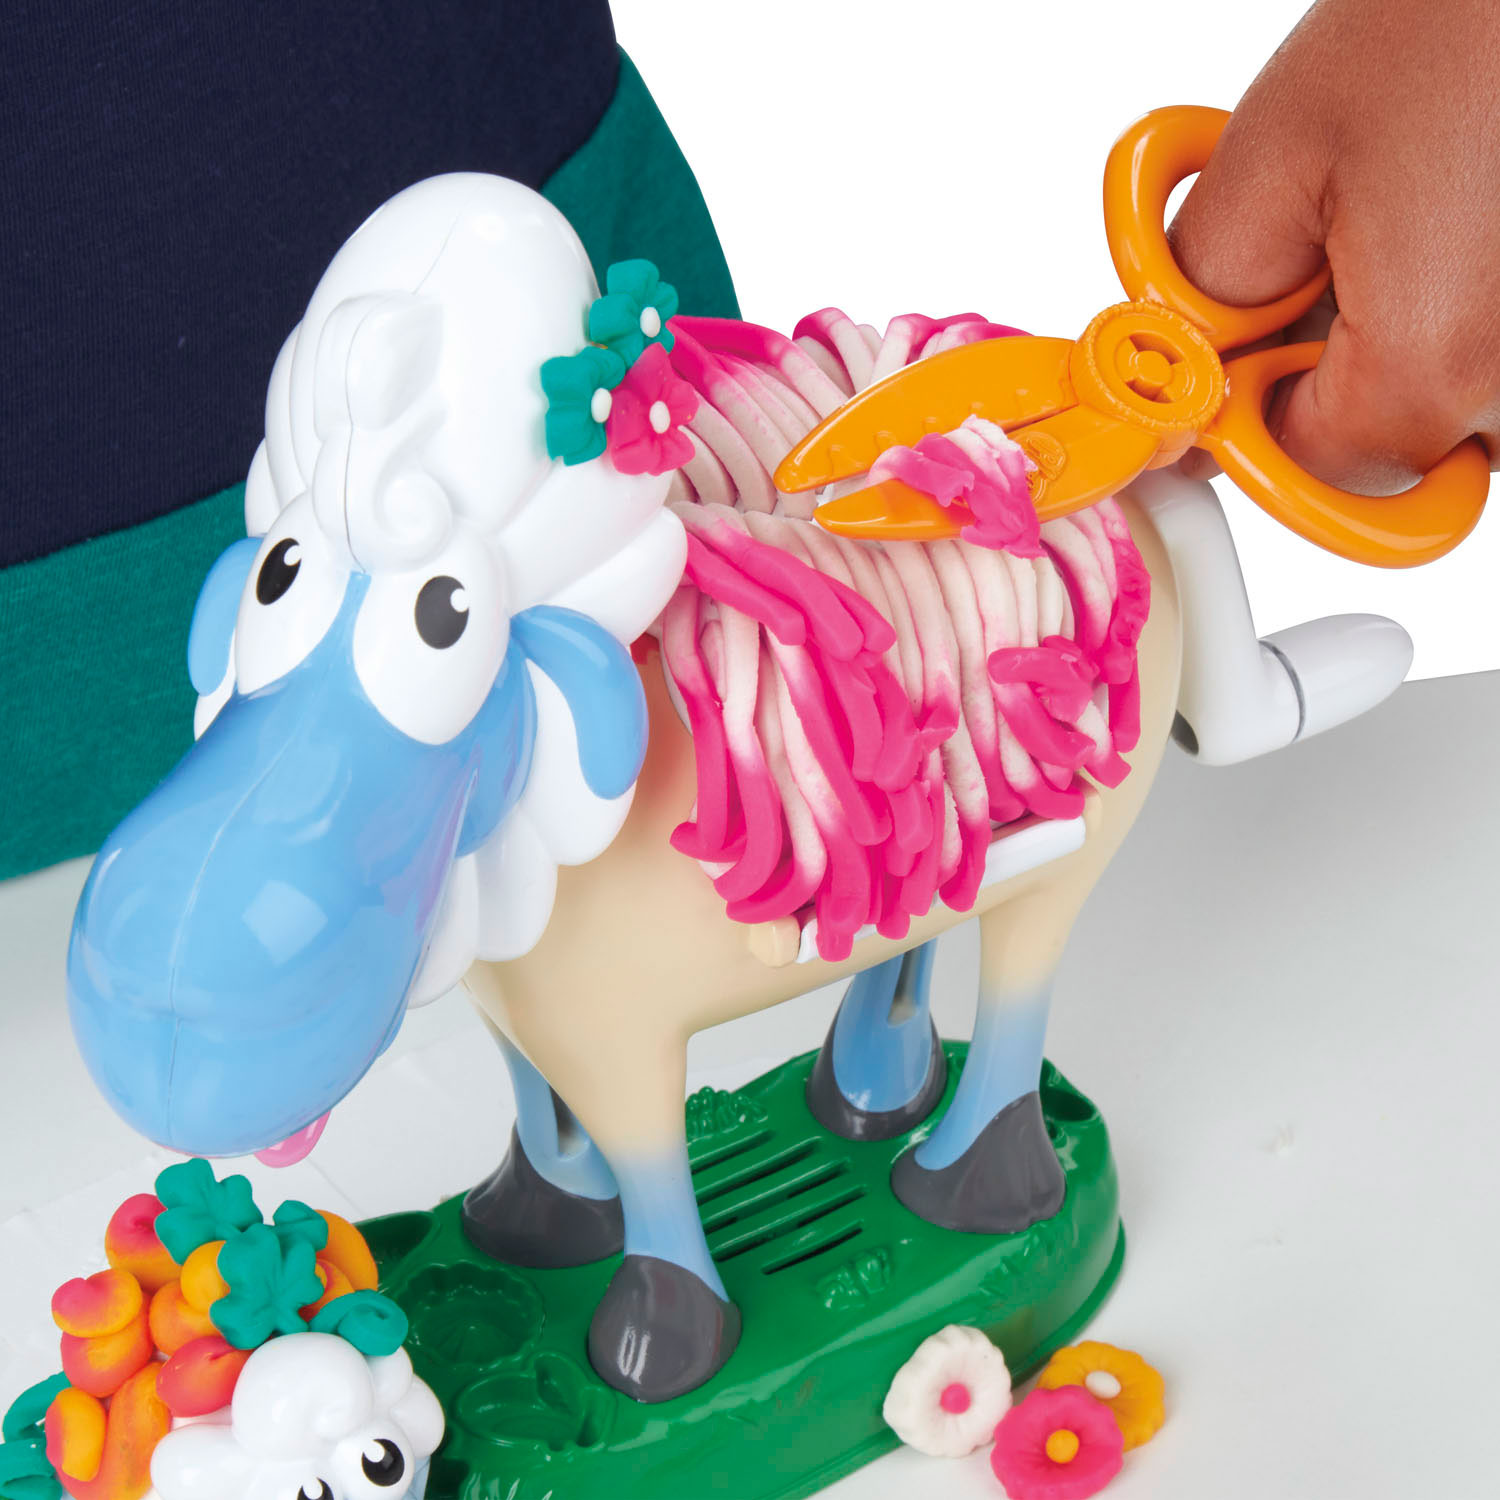 Play-Doh Animal Crew rasiert Schafe